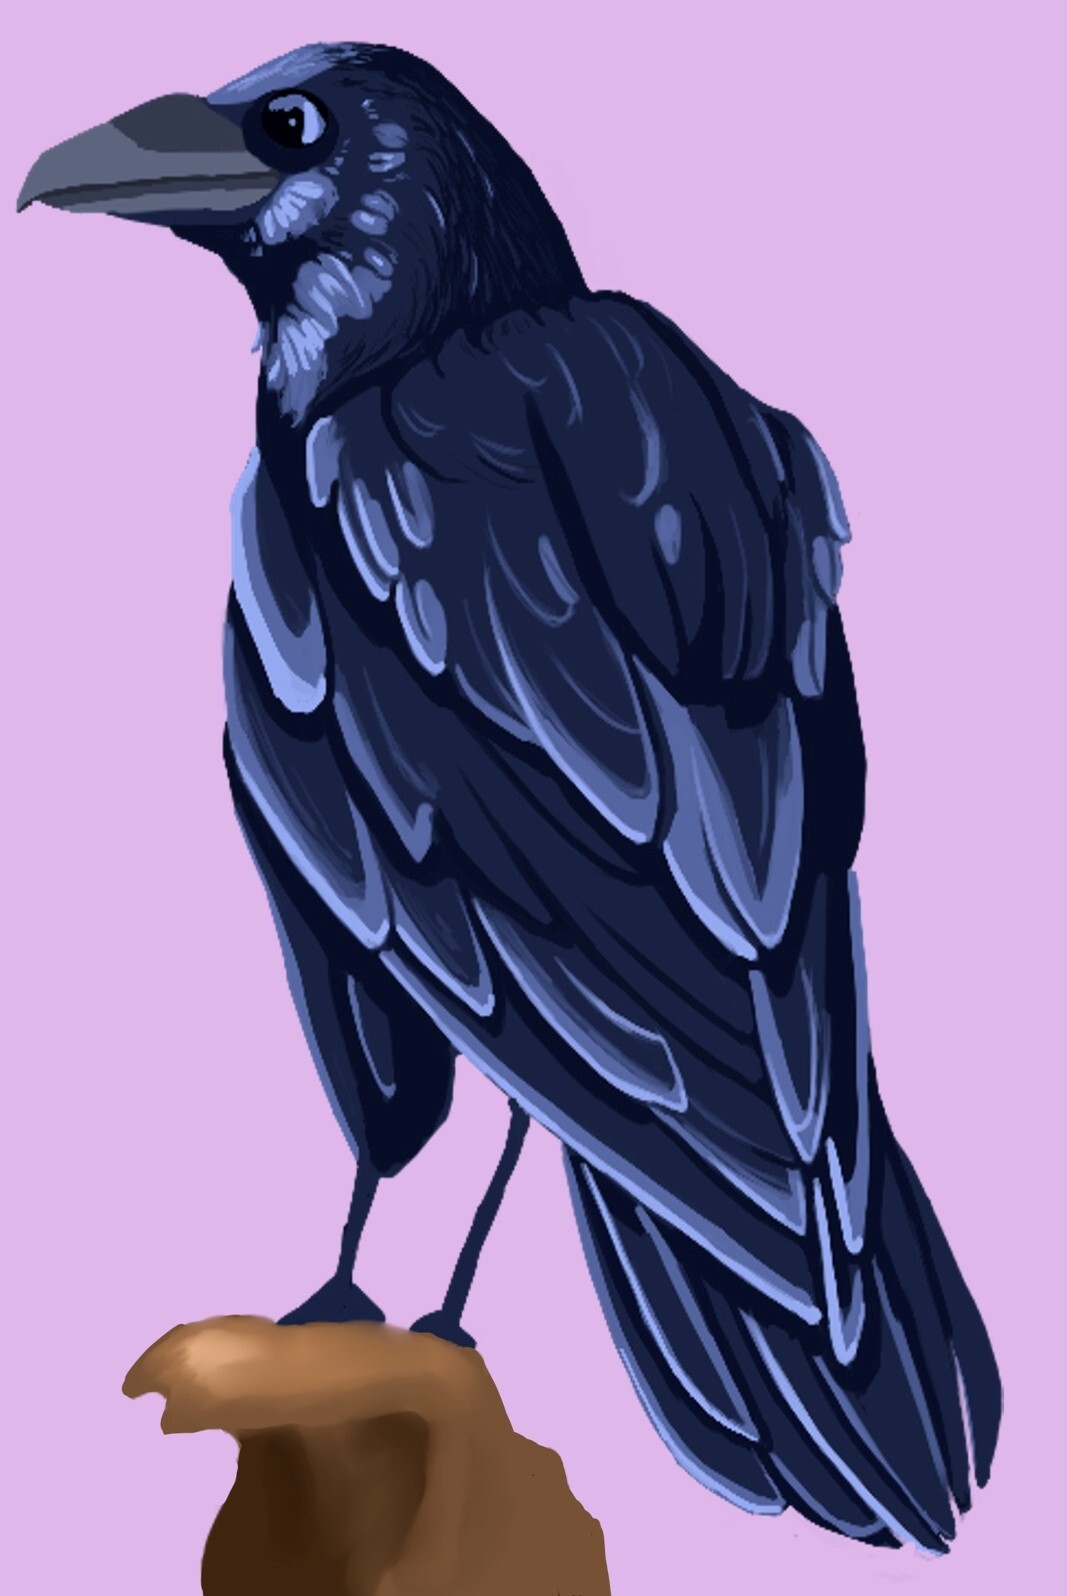 ArtStation - Crow illustration